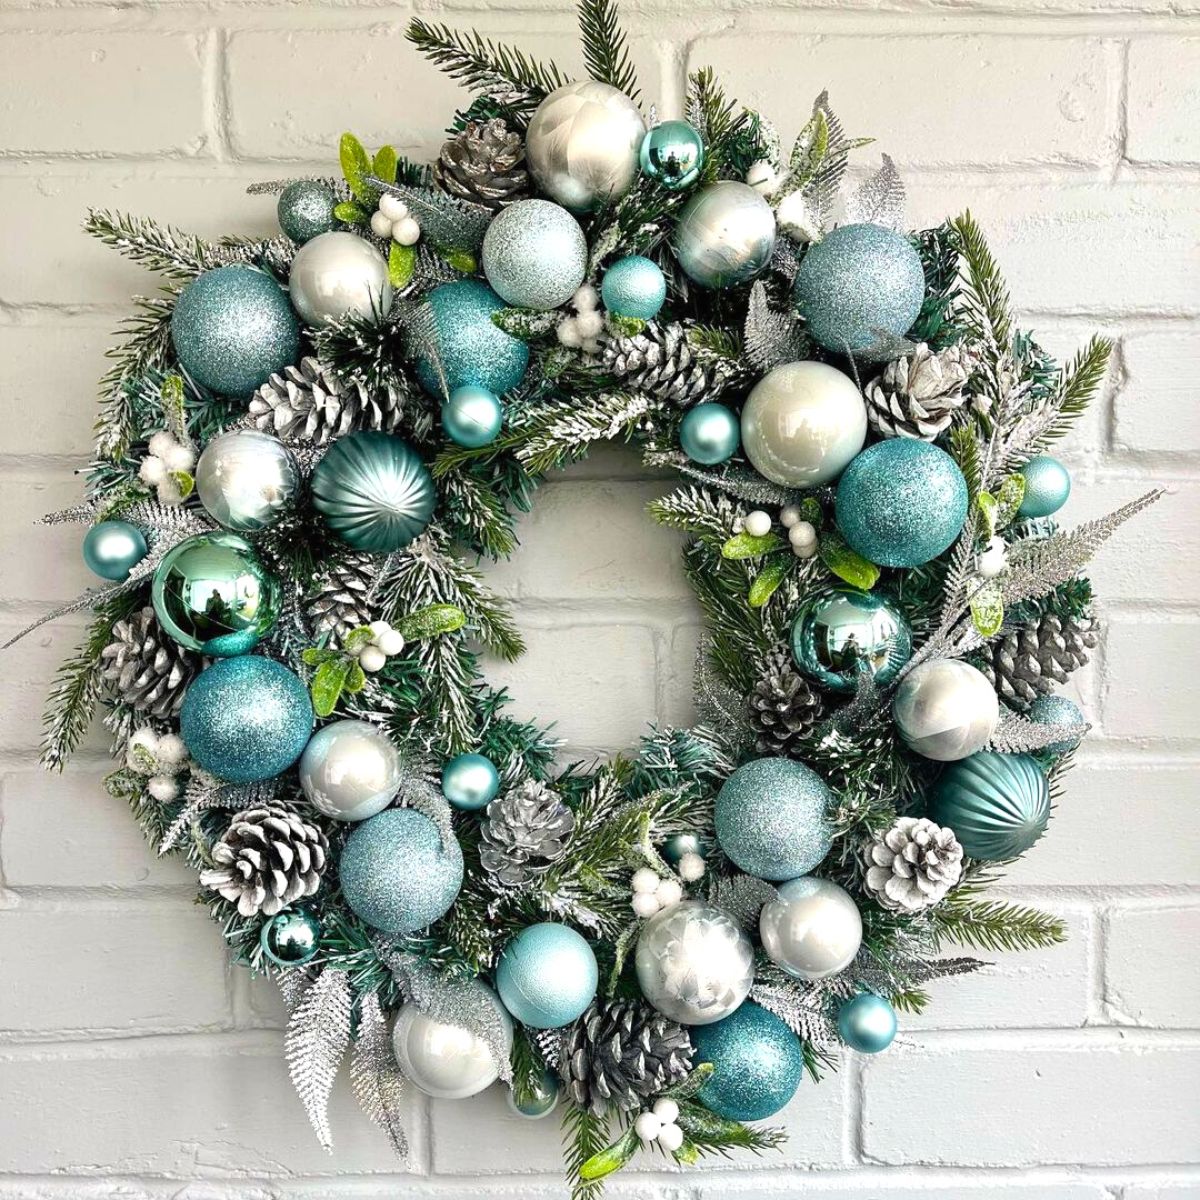 A Christmas wreath in sky blue tones